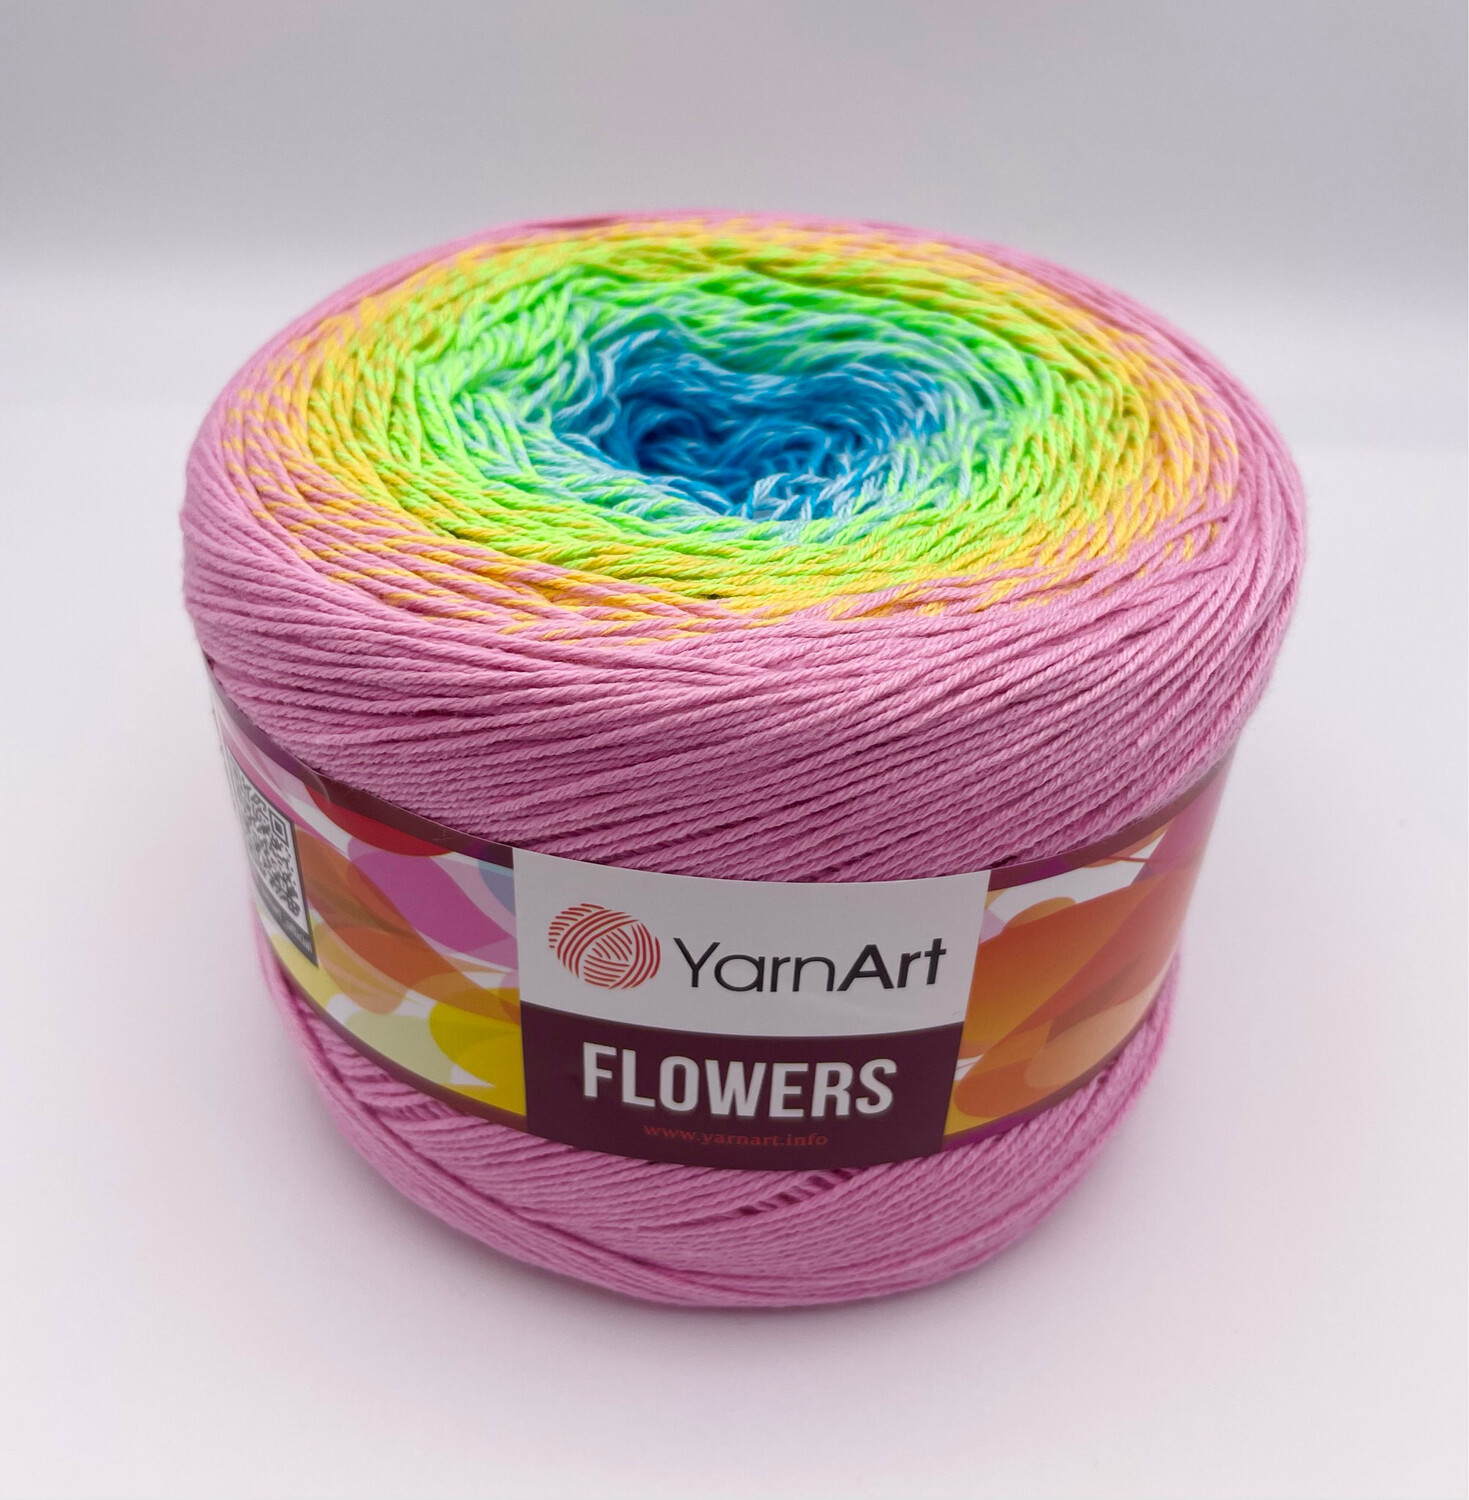 YarnArt Flowers Yarn Cake - 312